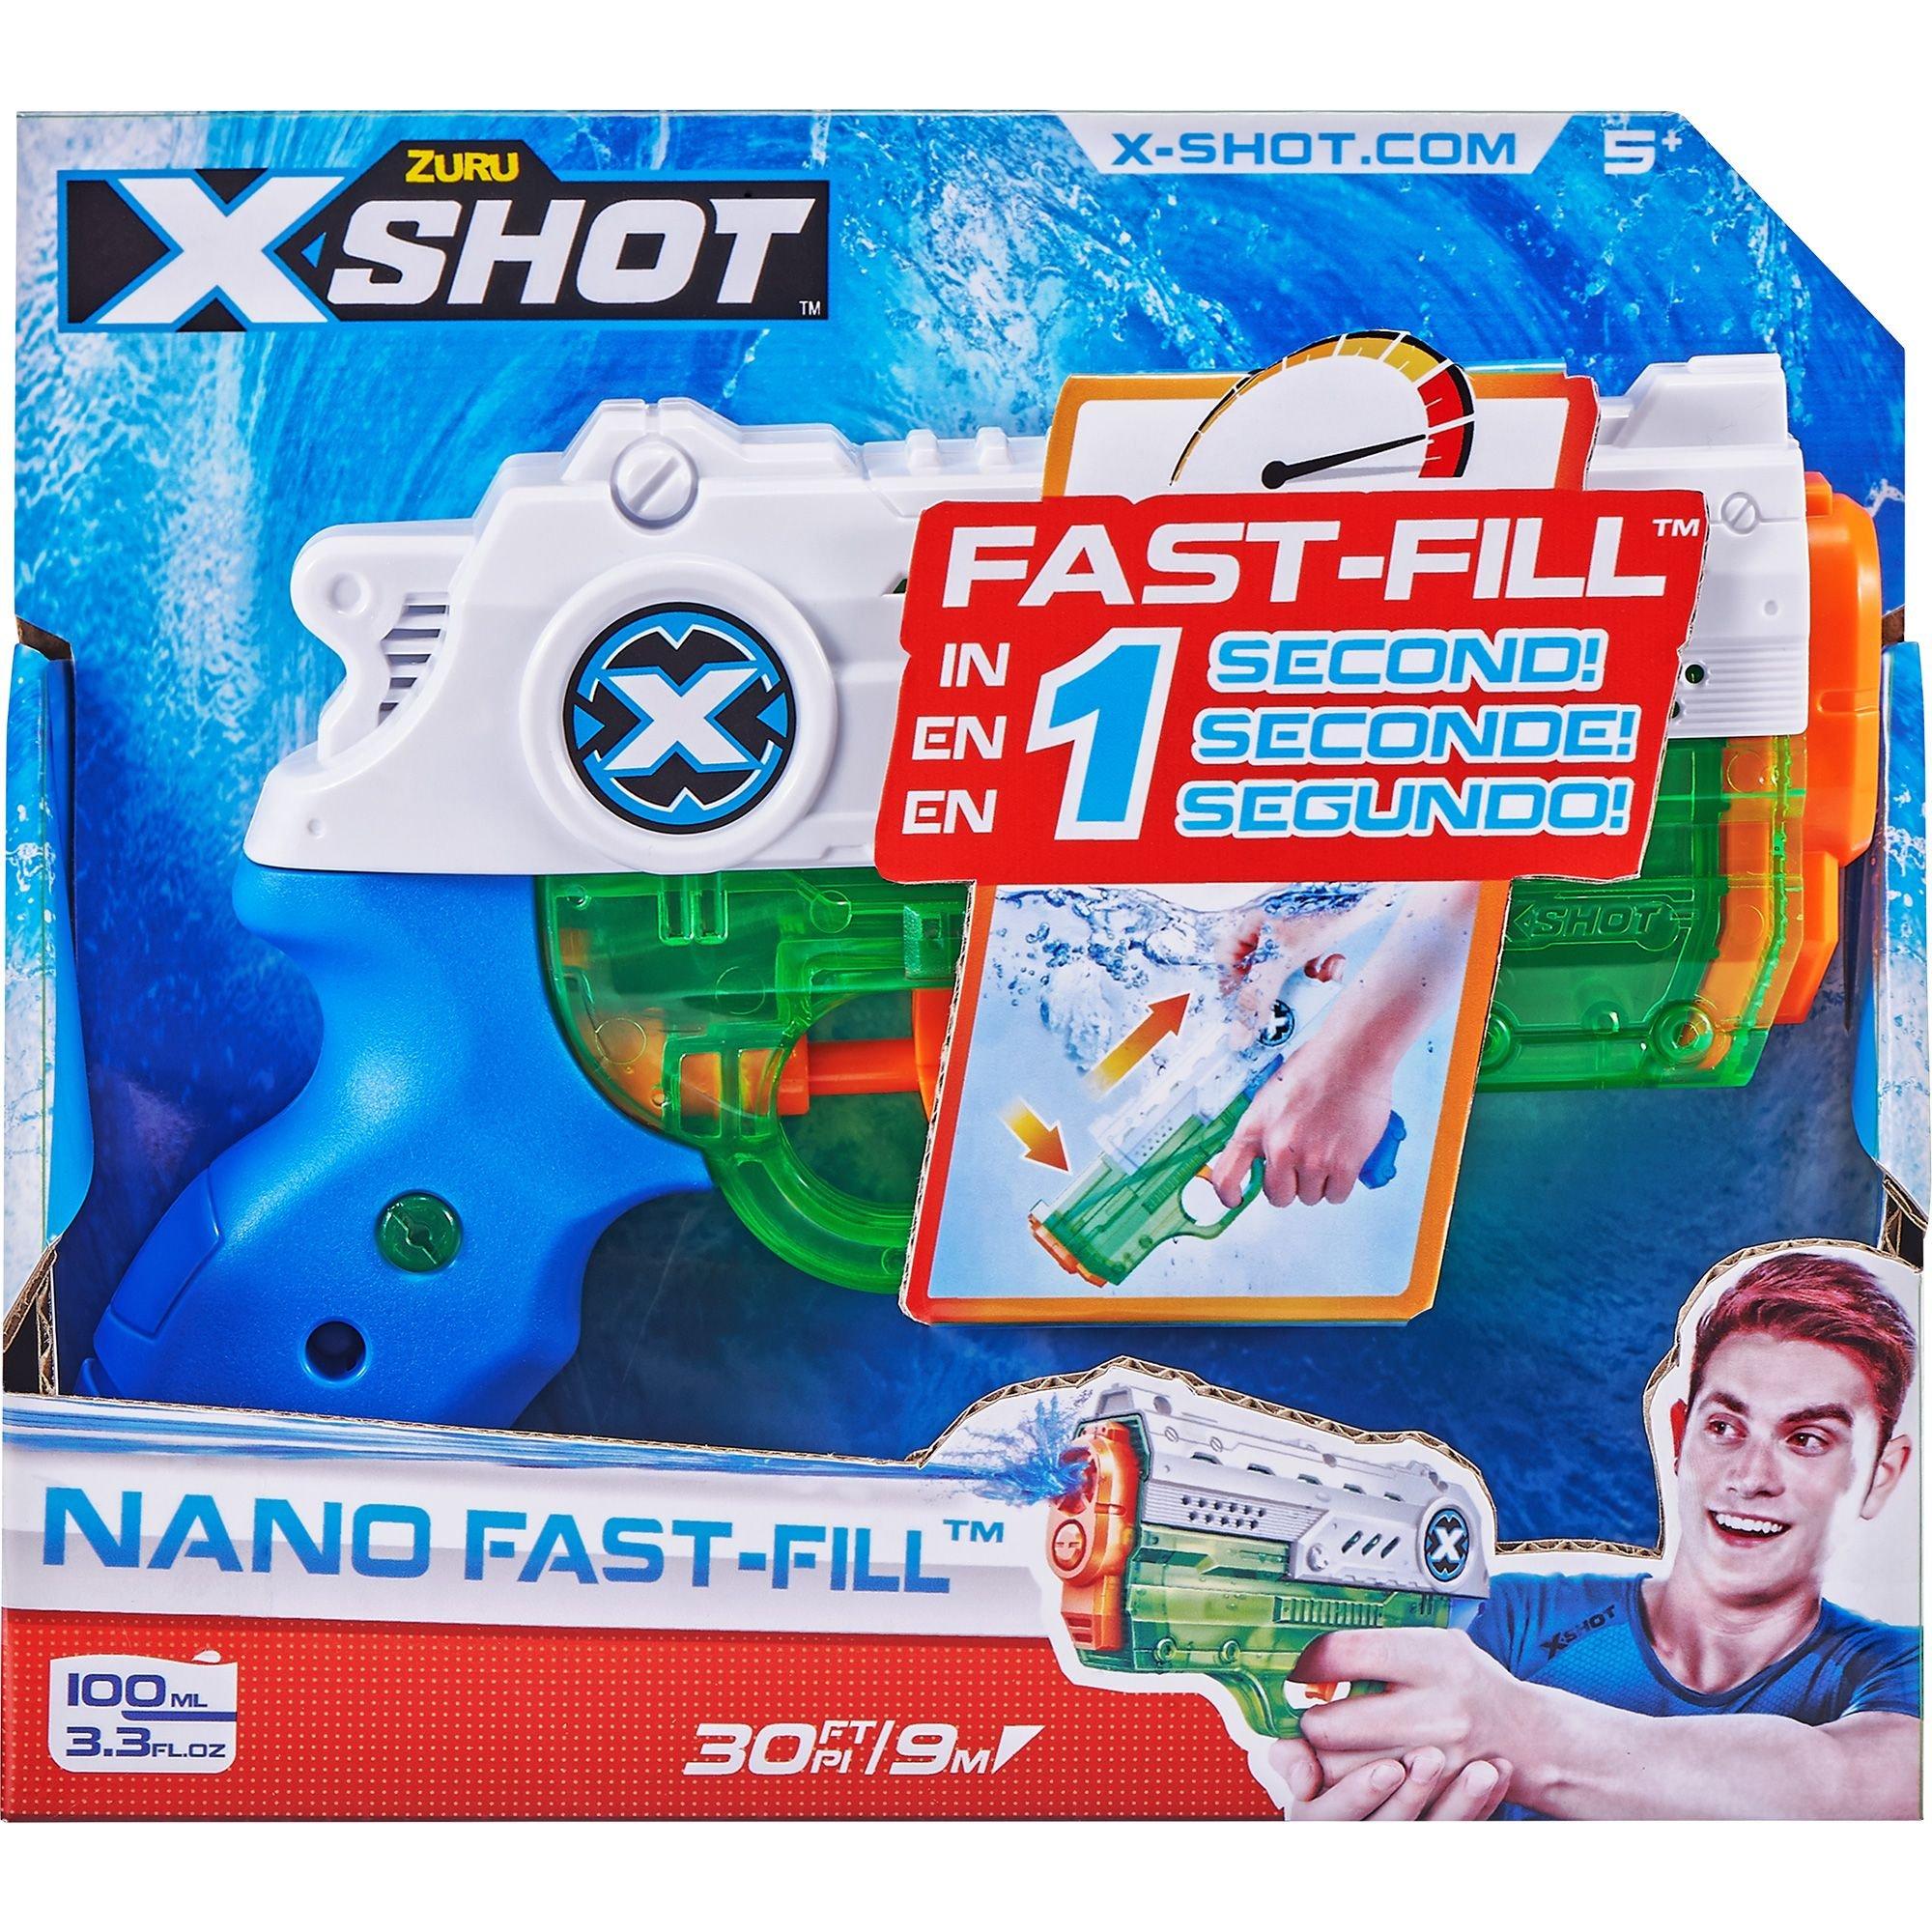 Zuru City Party Blaster, Range X-Shot Fill 30ft 3.3oz, Fast | Water